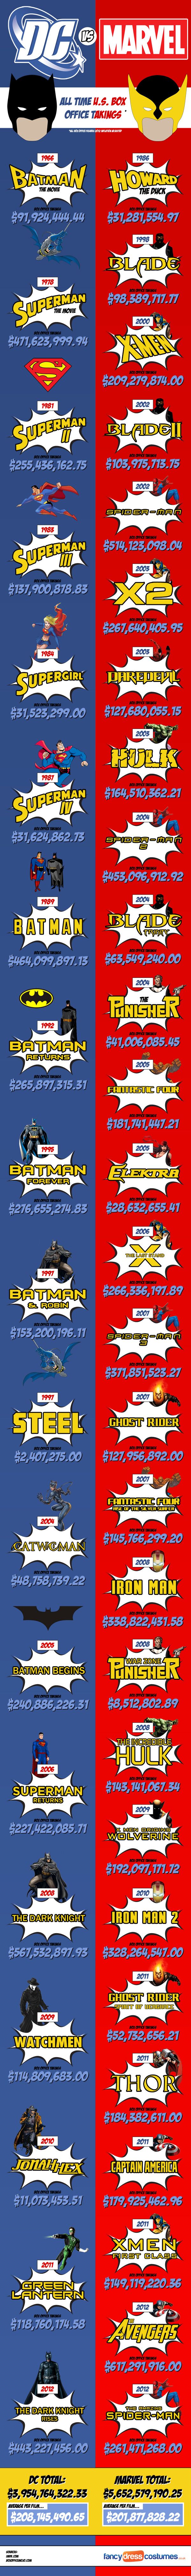 Marvel vs DC (Infographic)